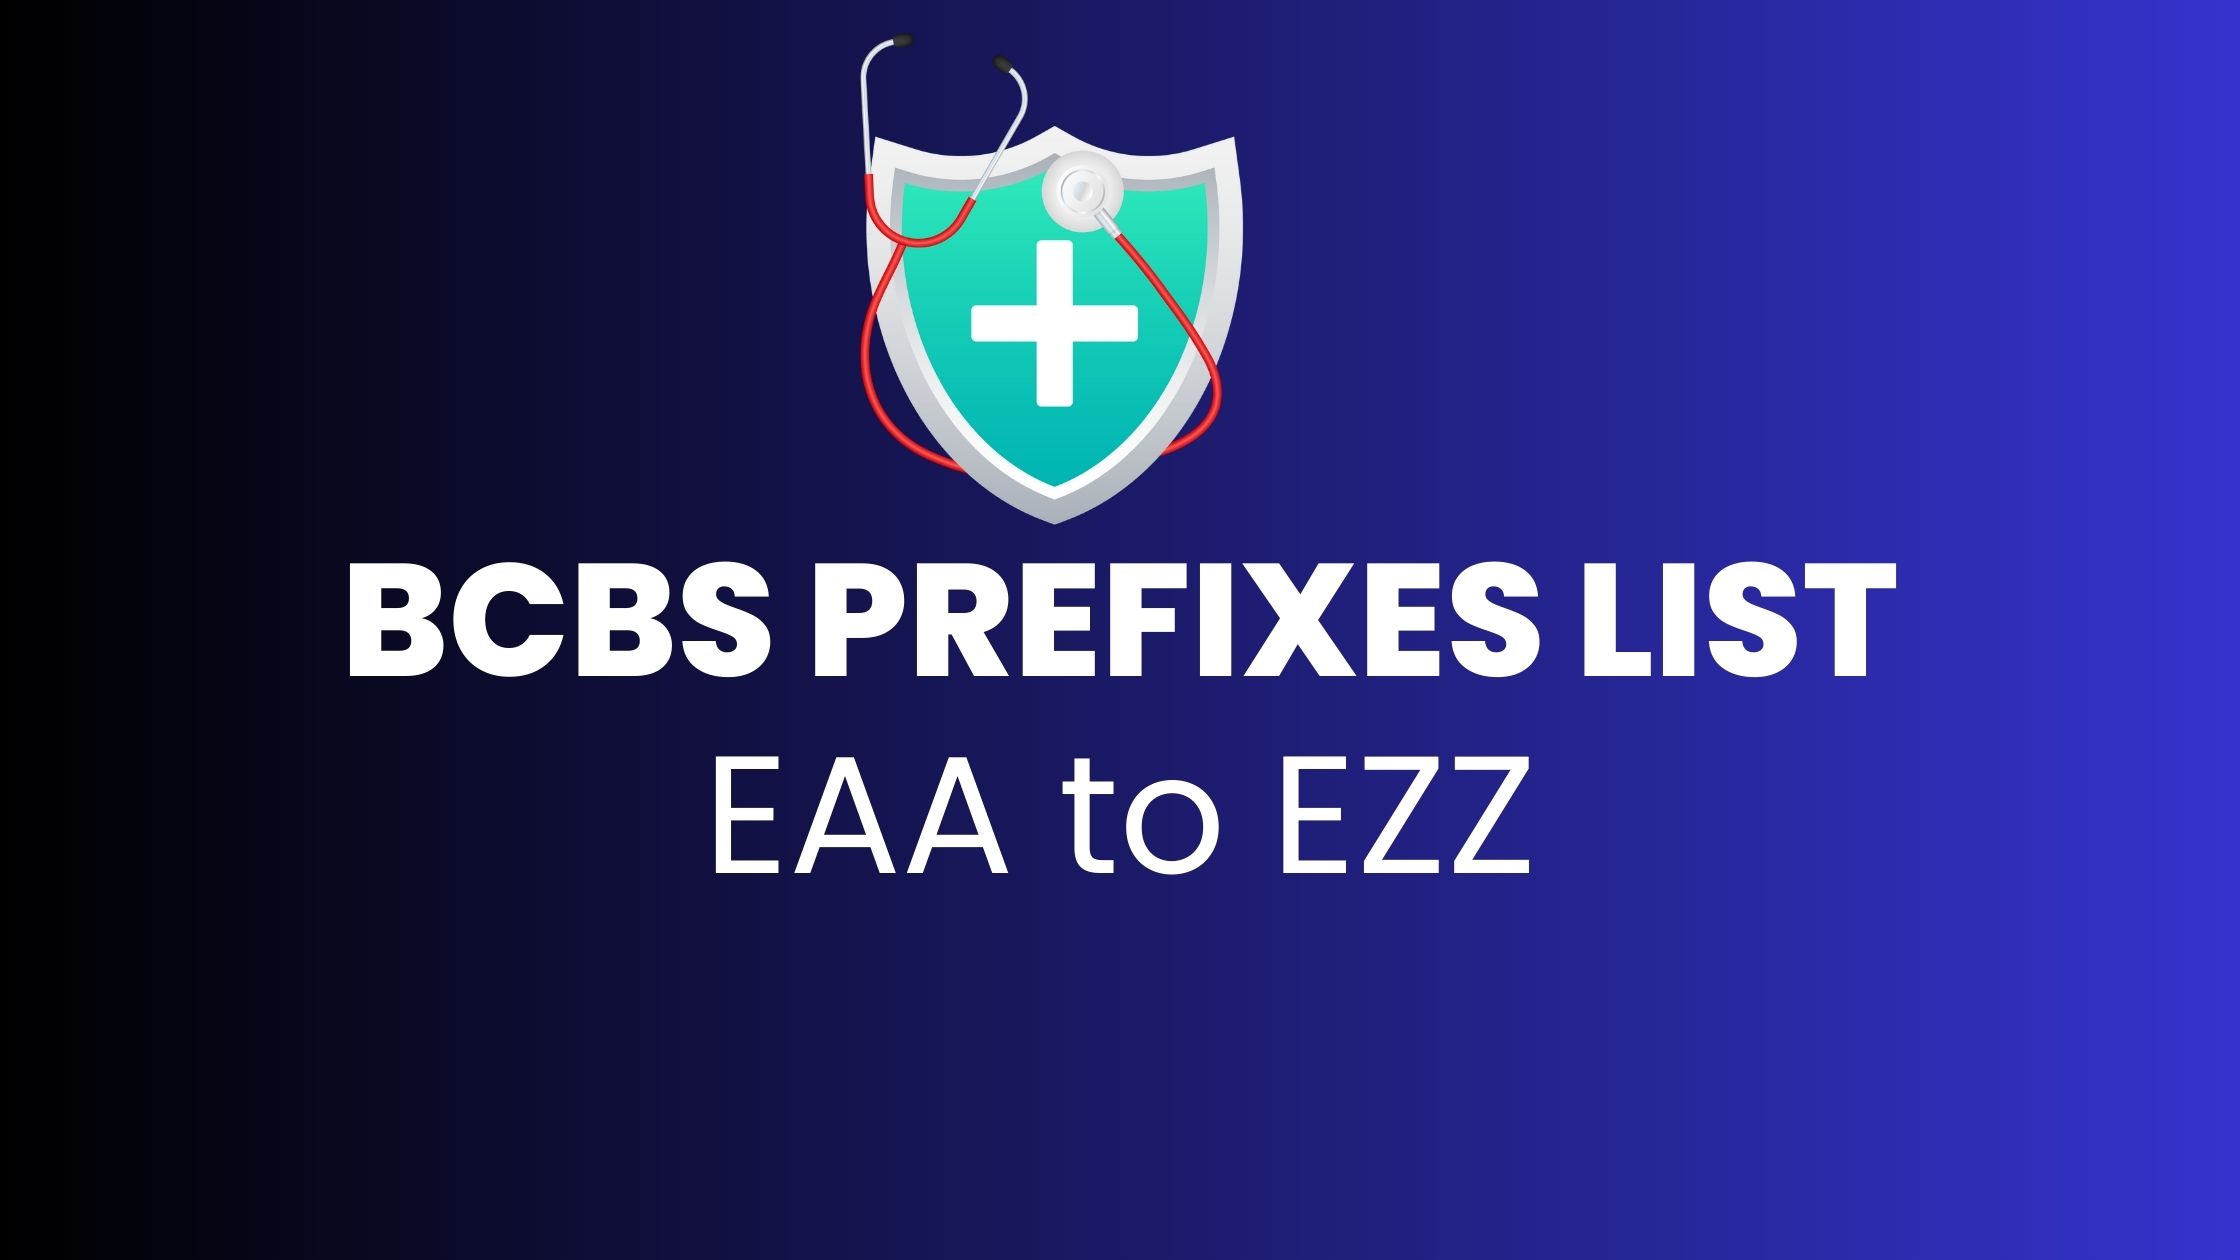 BCBS Prefix EAA to EZZ